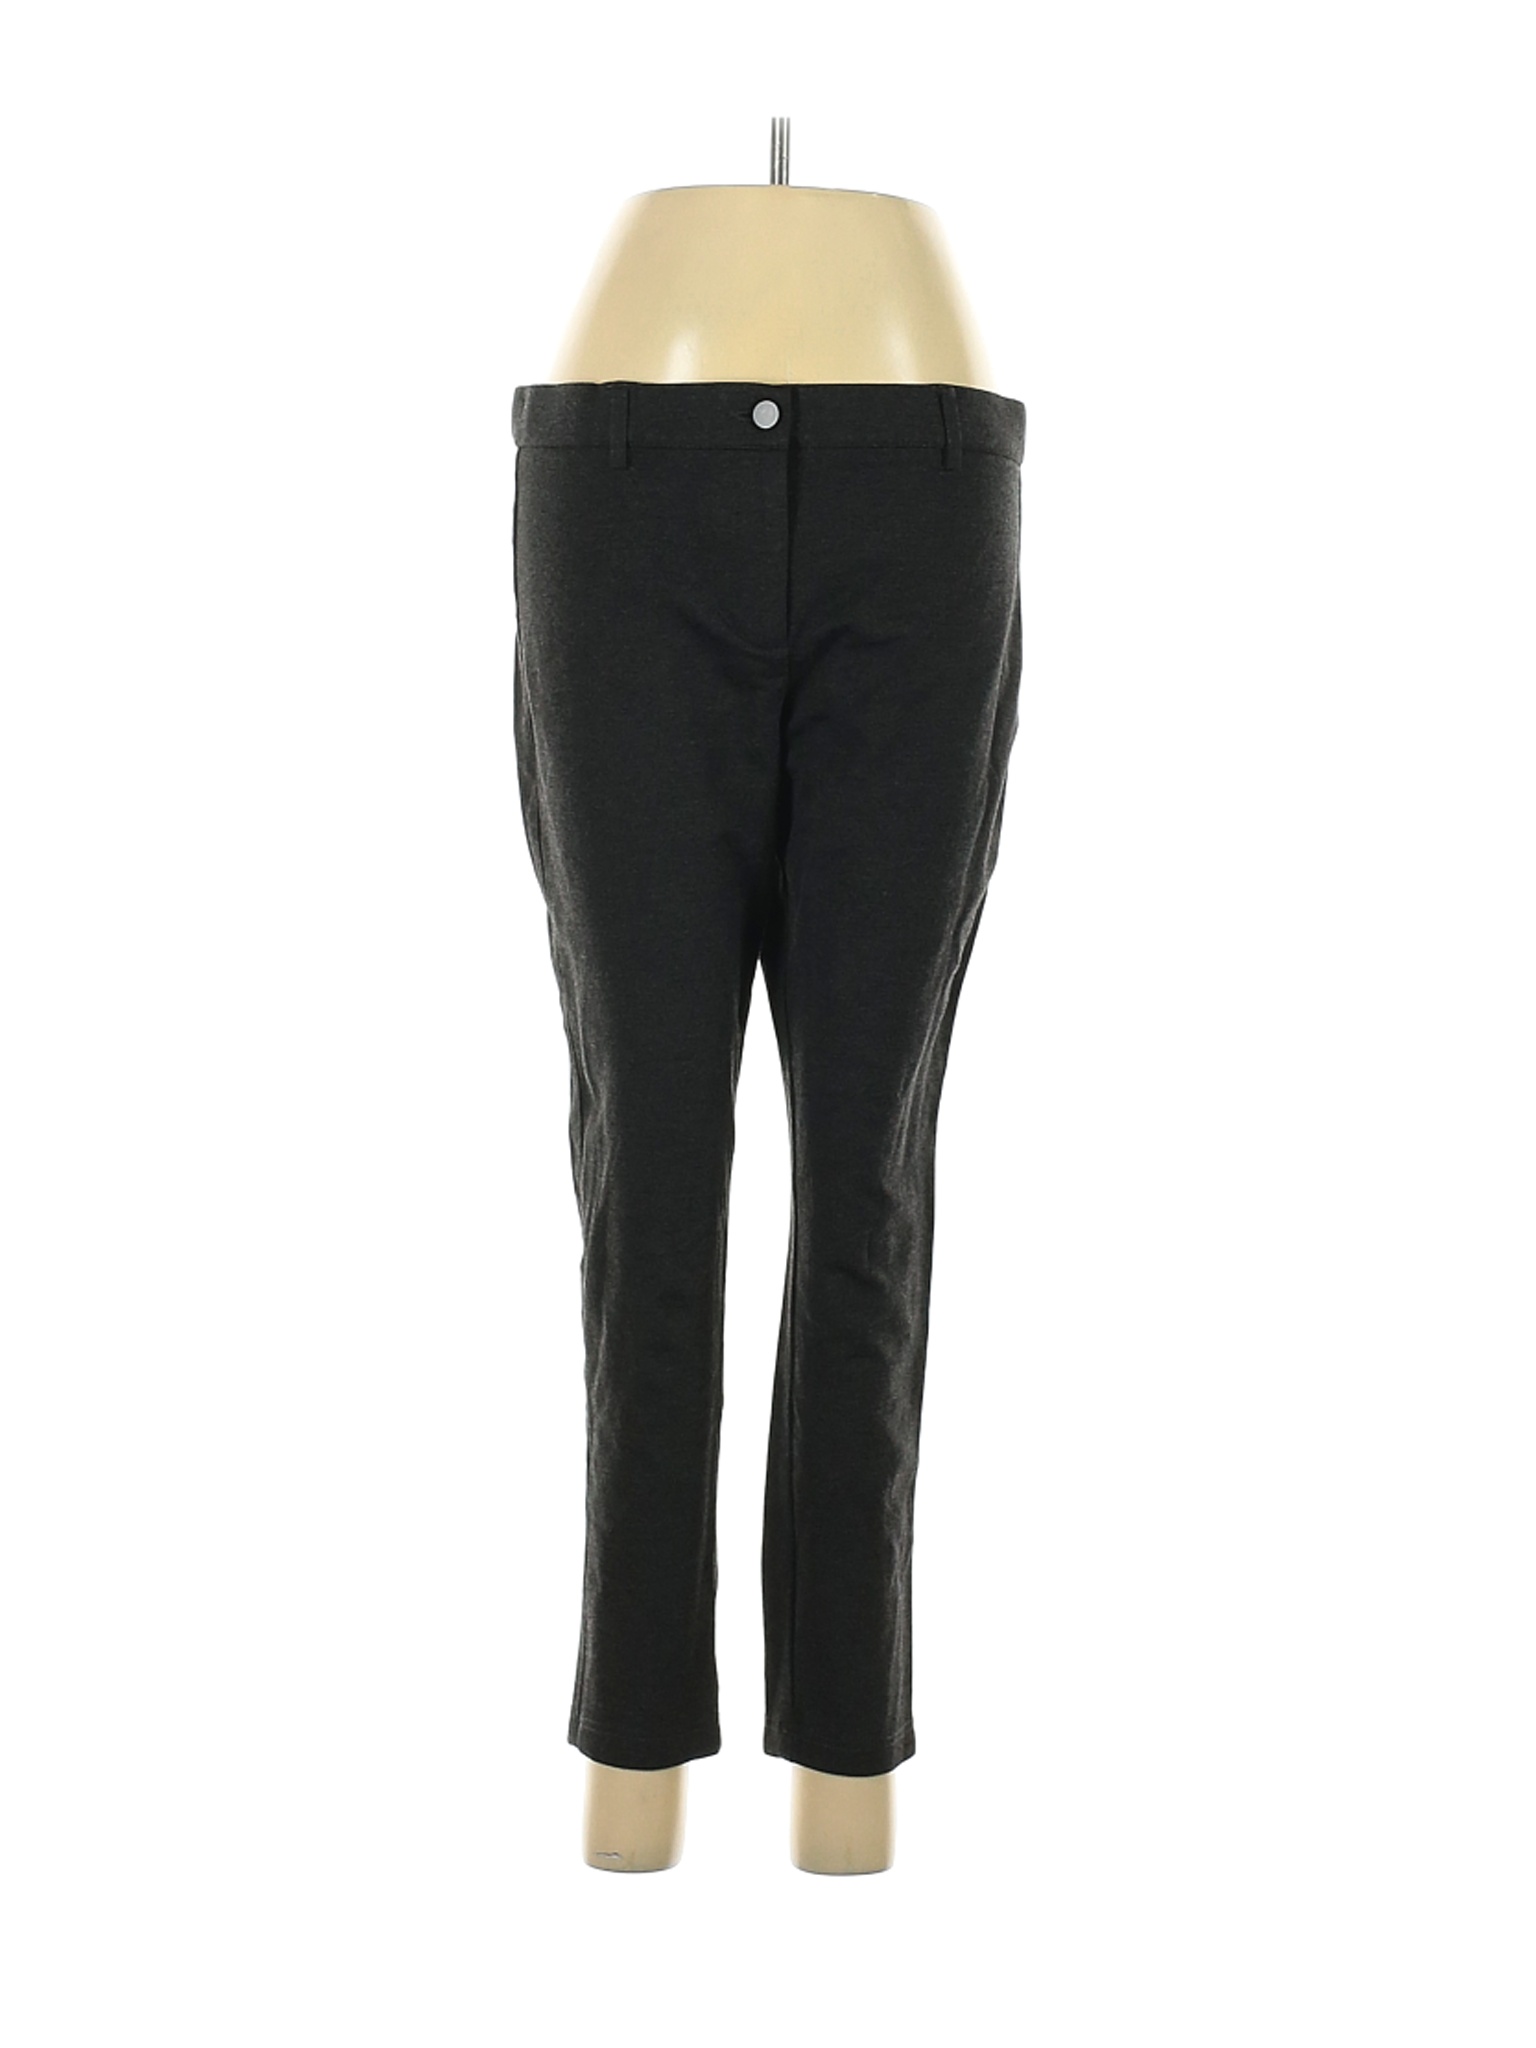 Mario Serrani Women Black Dress Pants L | eBay